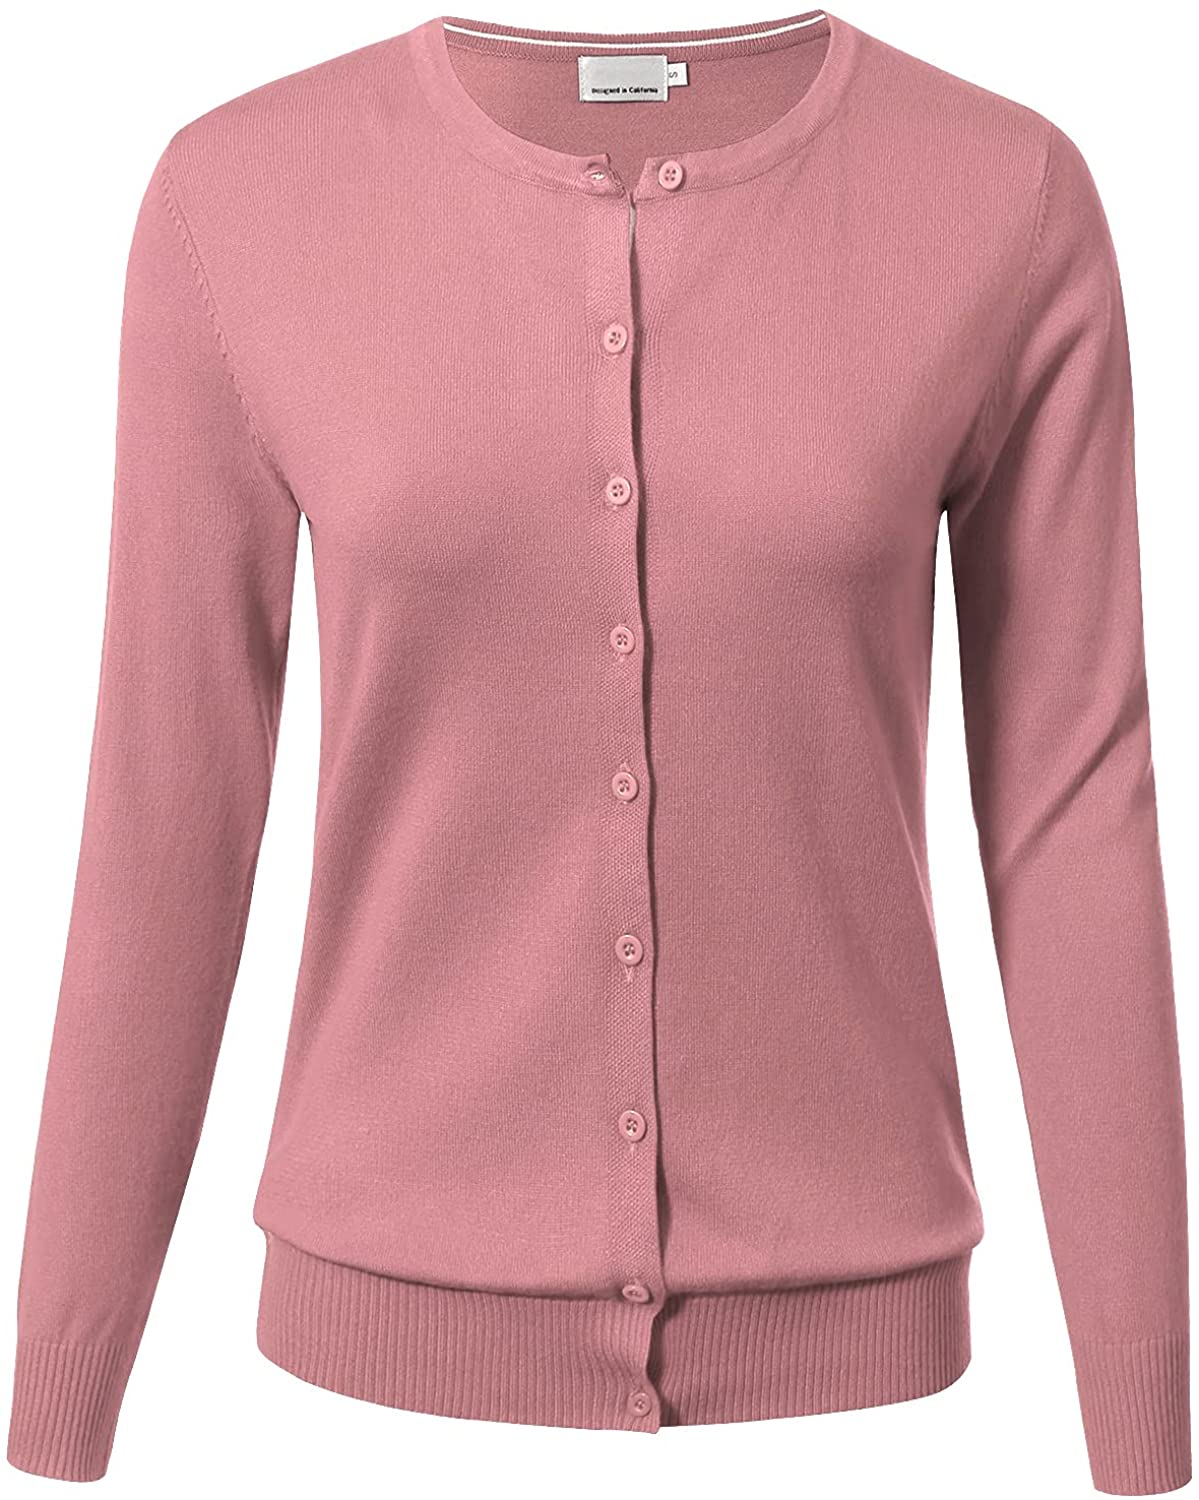 Allsense Women Button Down Long Sleeve Crewneck Soft Knit Cardigan Sweater S Rust 